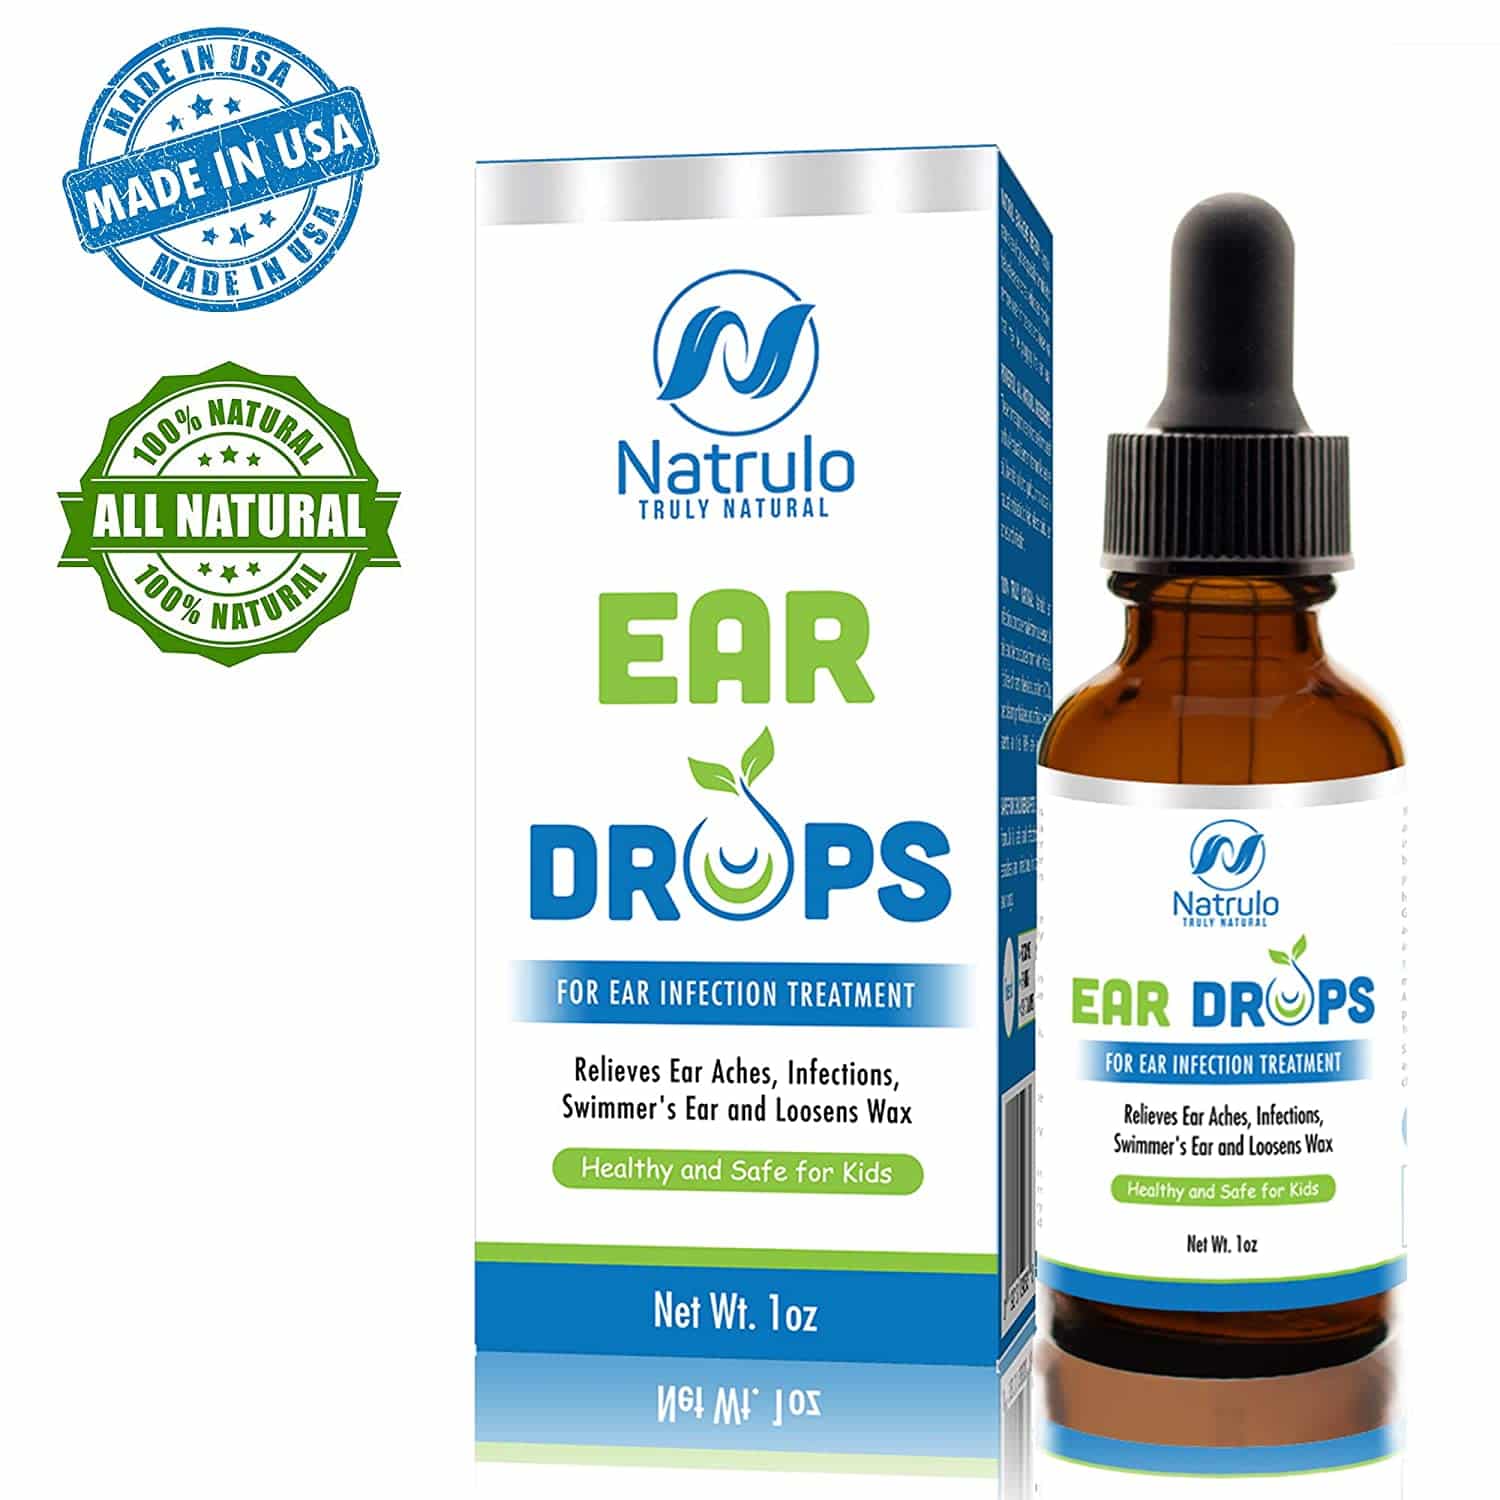 Amazon.com: Natrulo Natural Ear Drops for Ear Infection Treatment ...